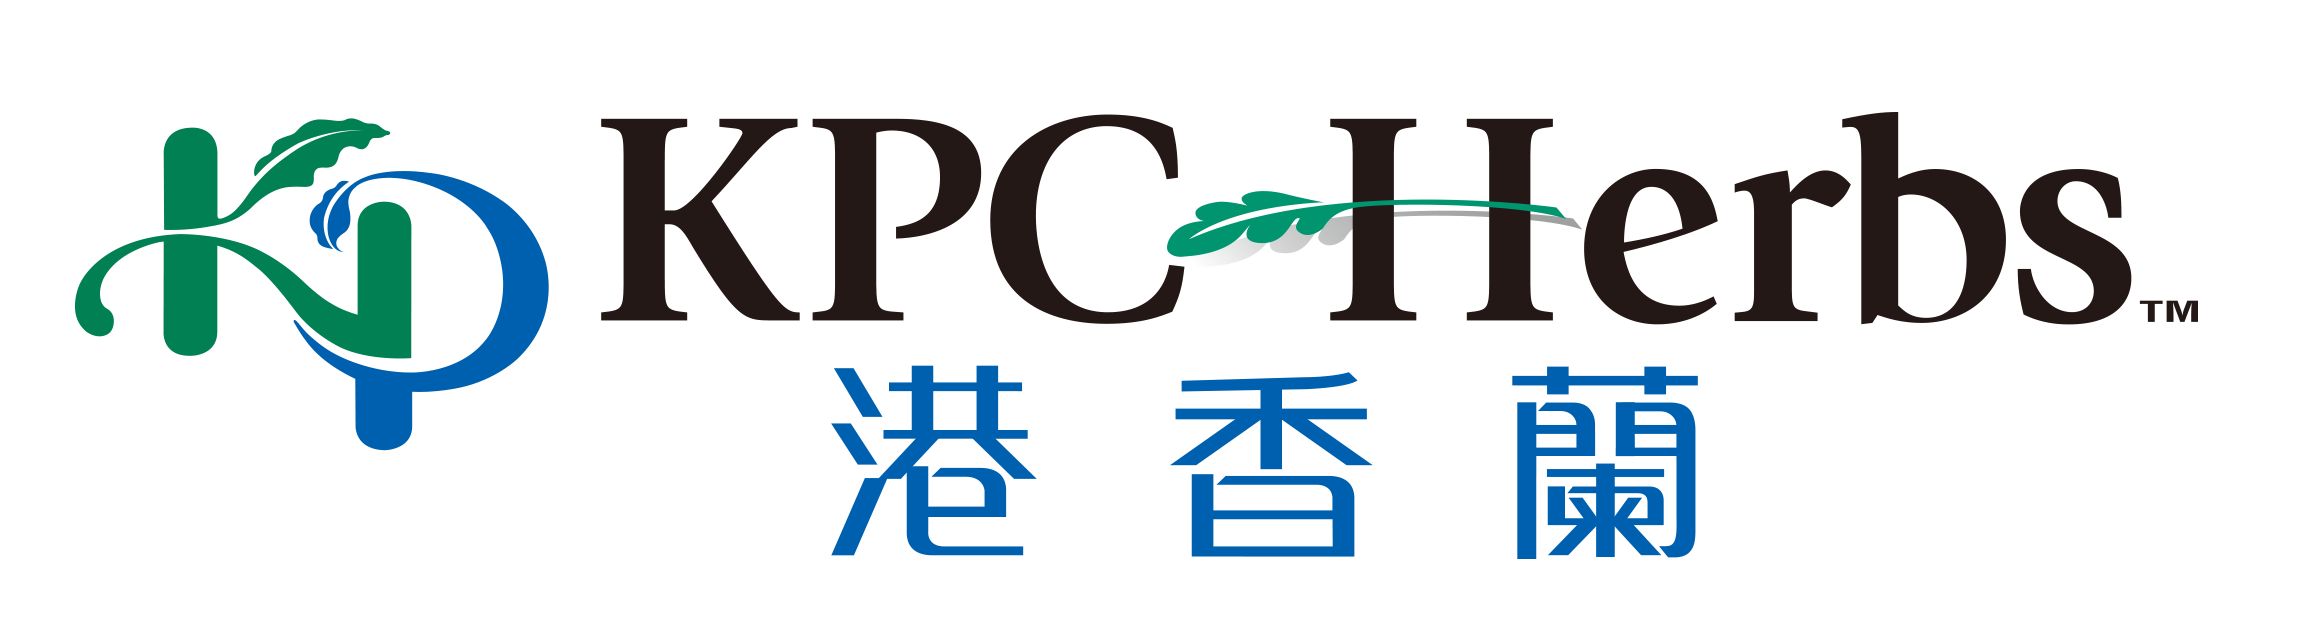 KPC logo 